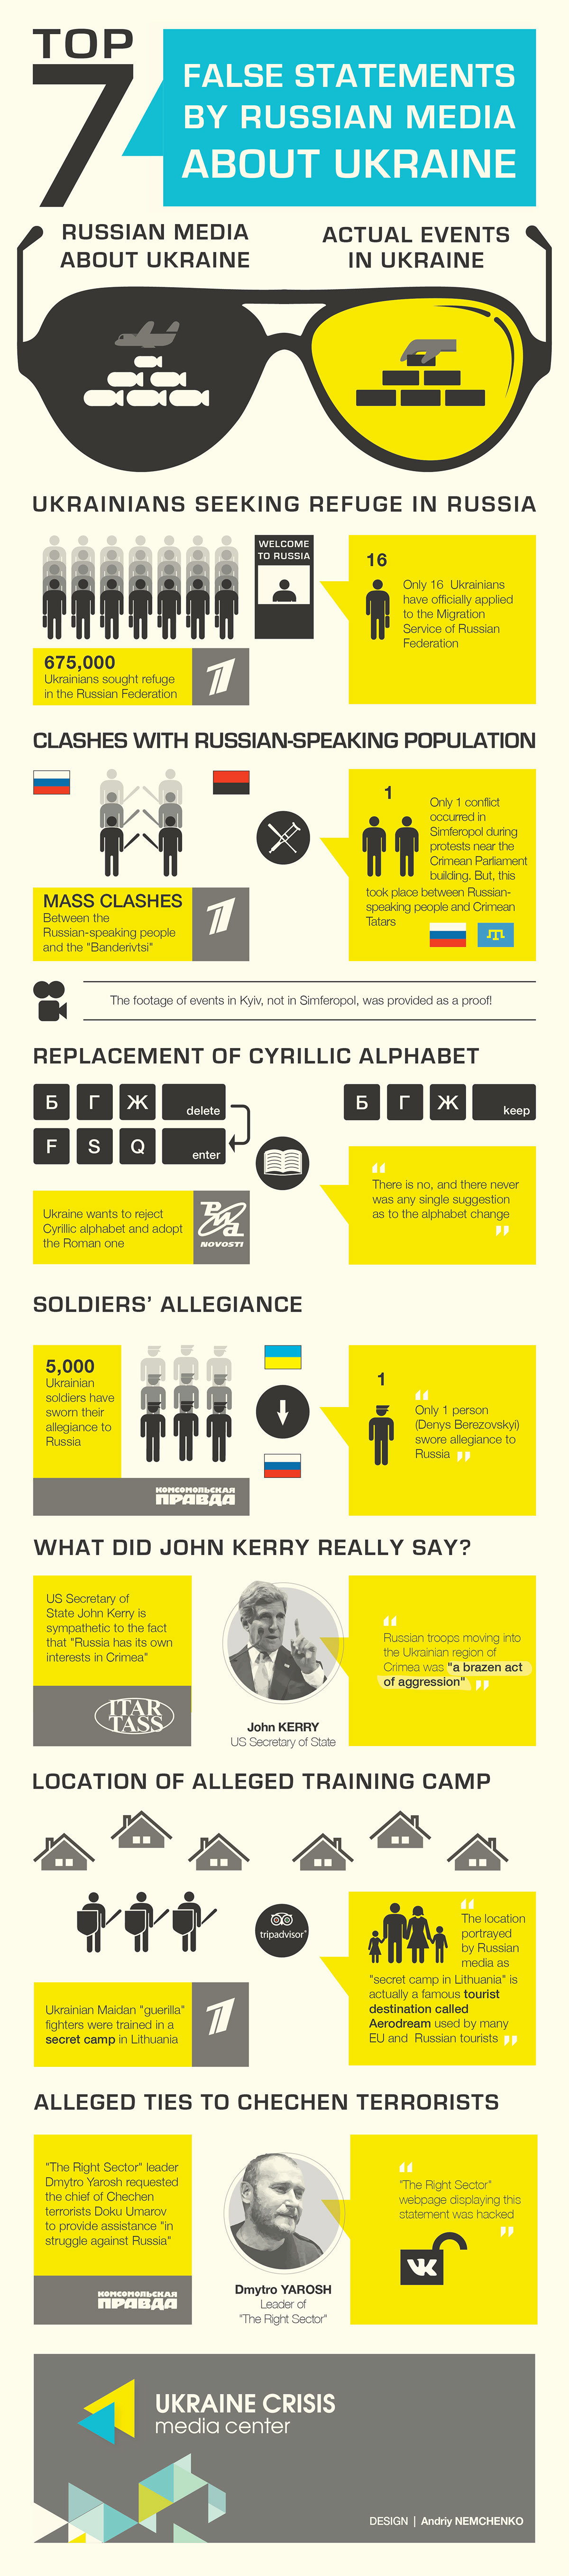 Adobe Portfolio ukraine crimea Russia putin War crisis conflict Propaganda John Kerry  Us EU news politics infographic lies